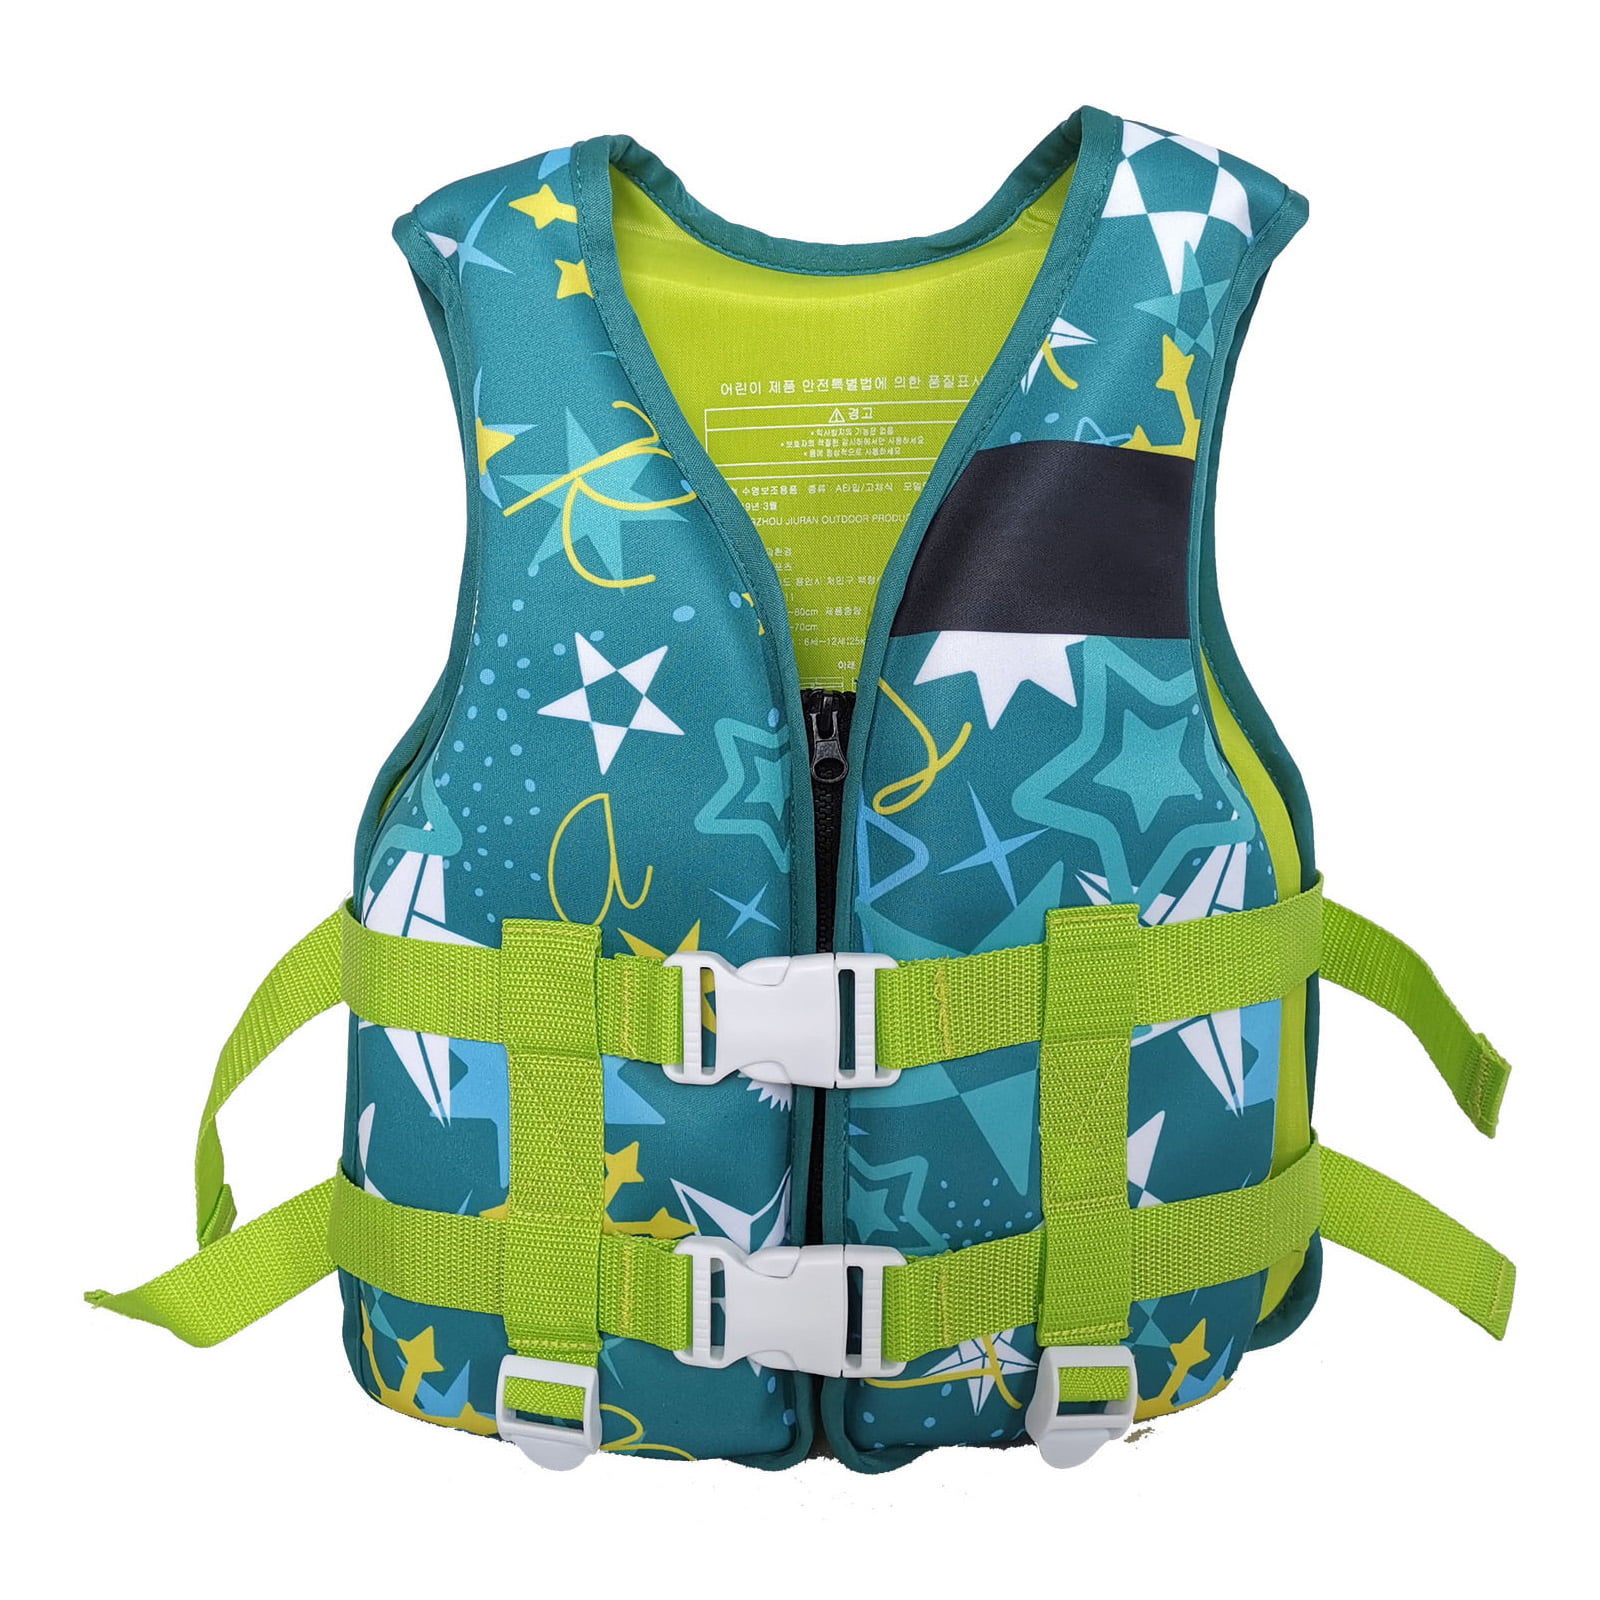 Swimming Pool Float Life Jacket Bright Color Inflatable Child Swim Training Vest Swim Accessories 